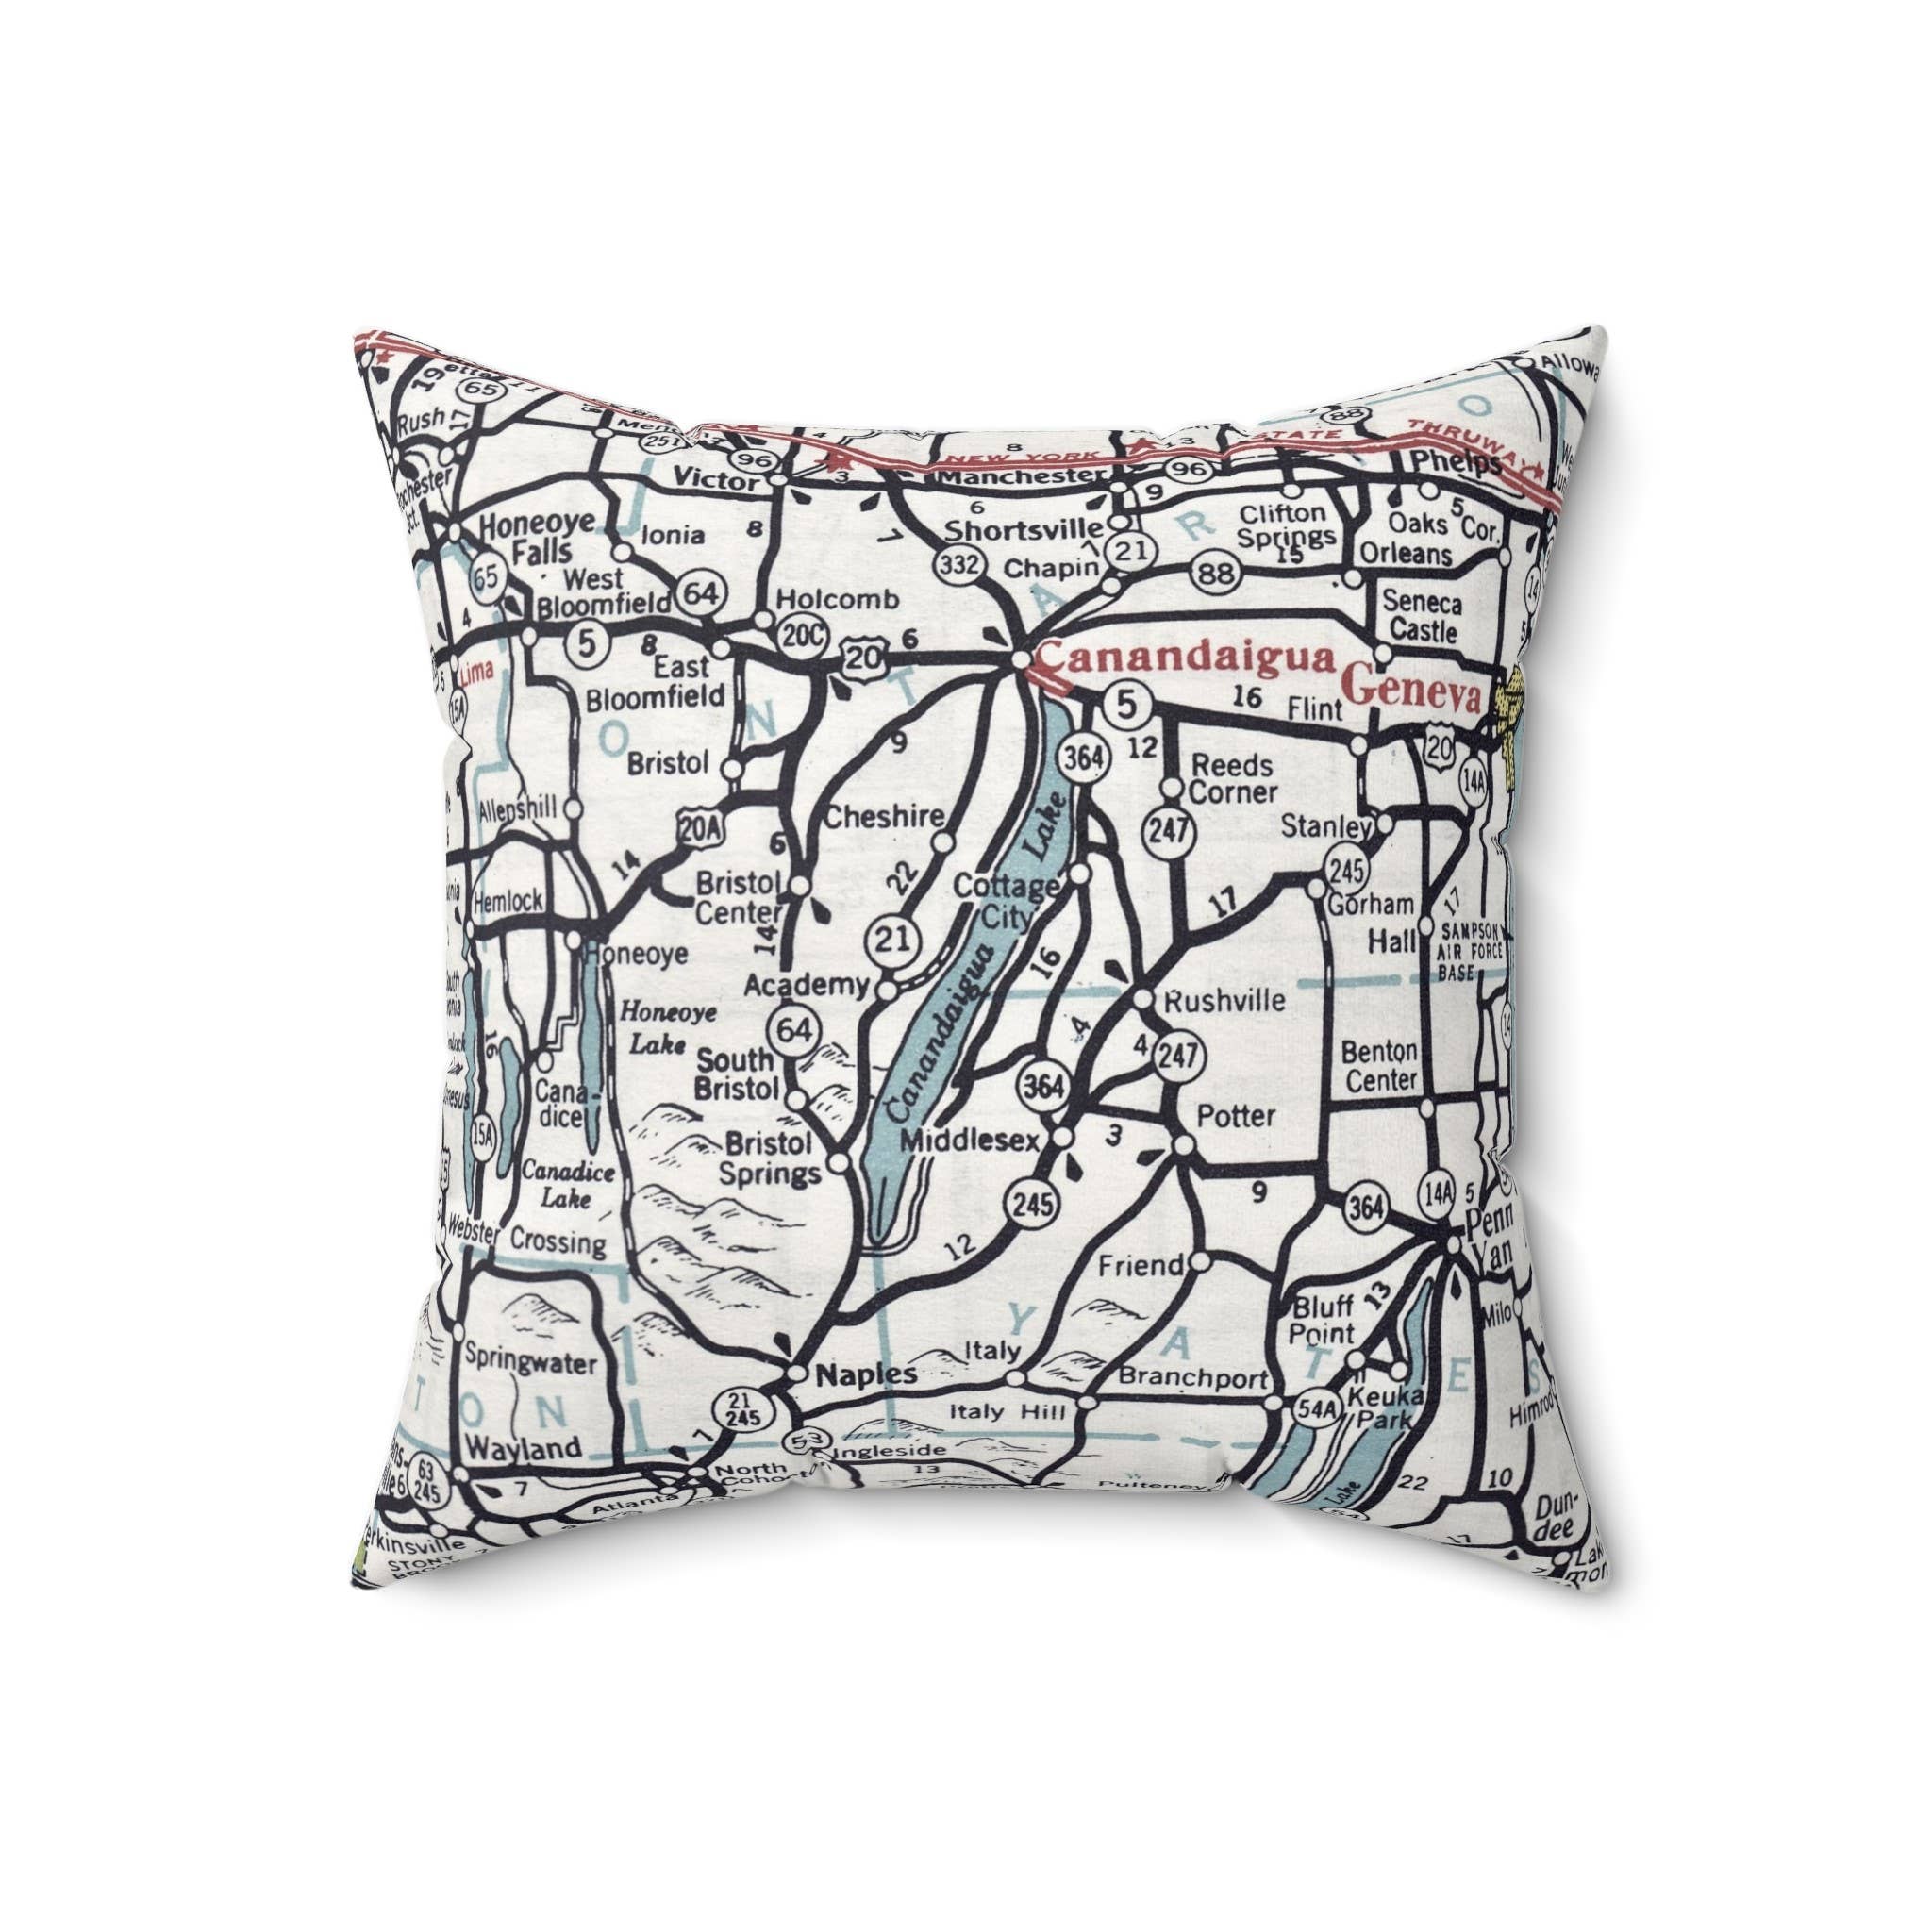 Daisy Mae Designs - Canandaigua Lake New York Map Pillow